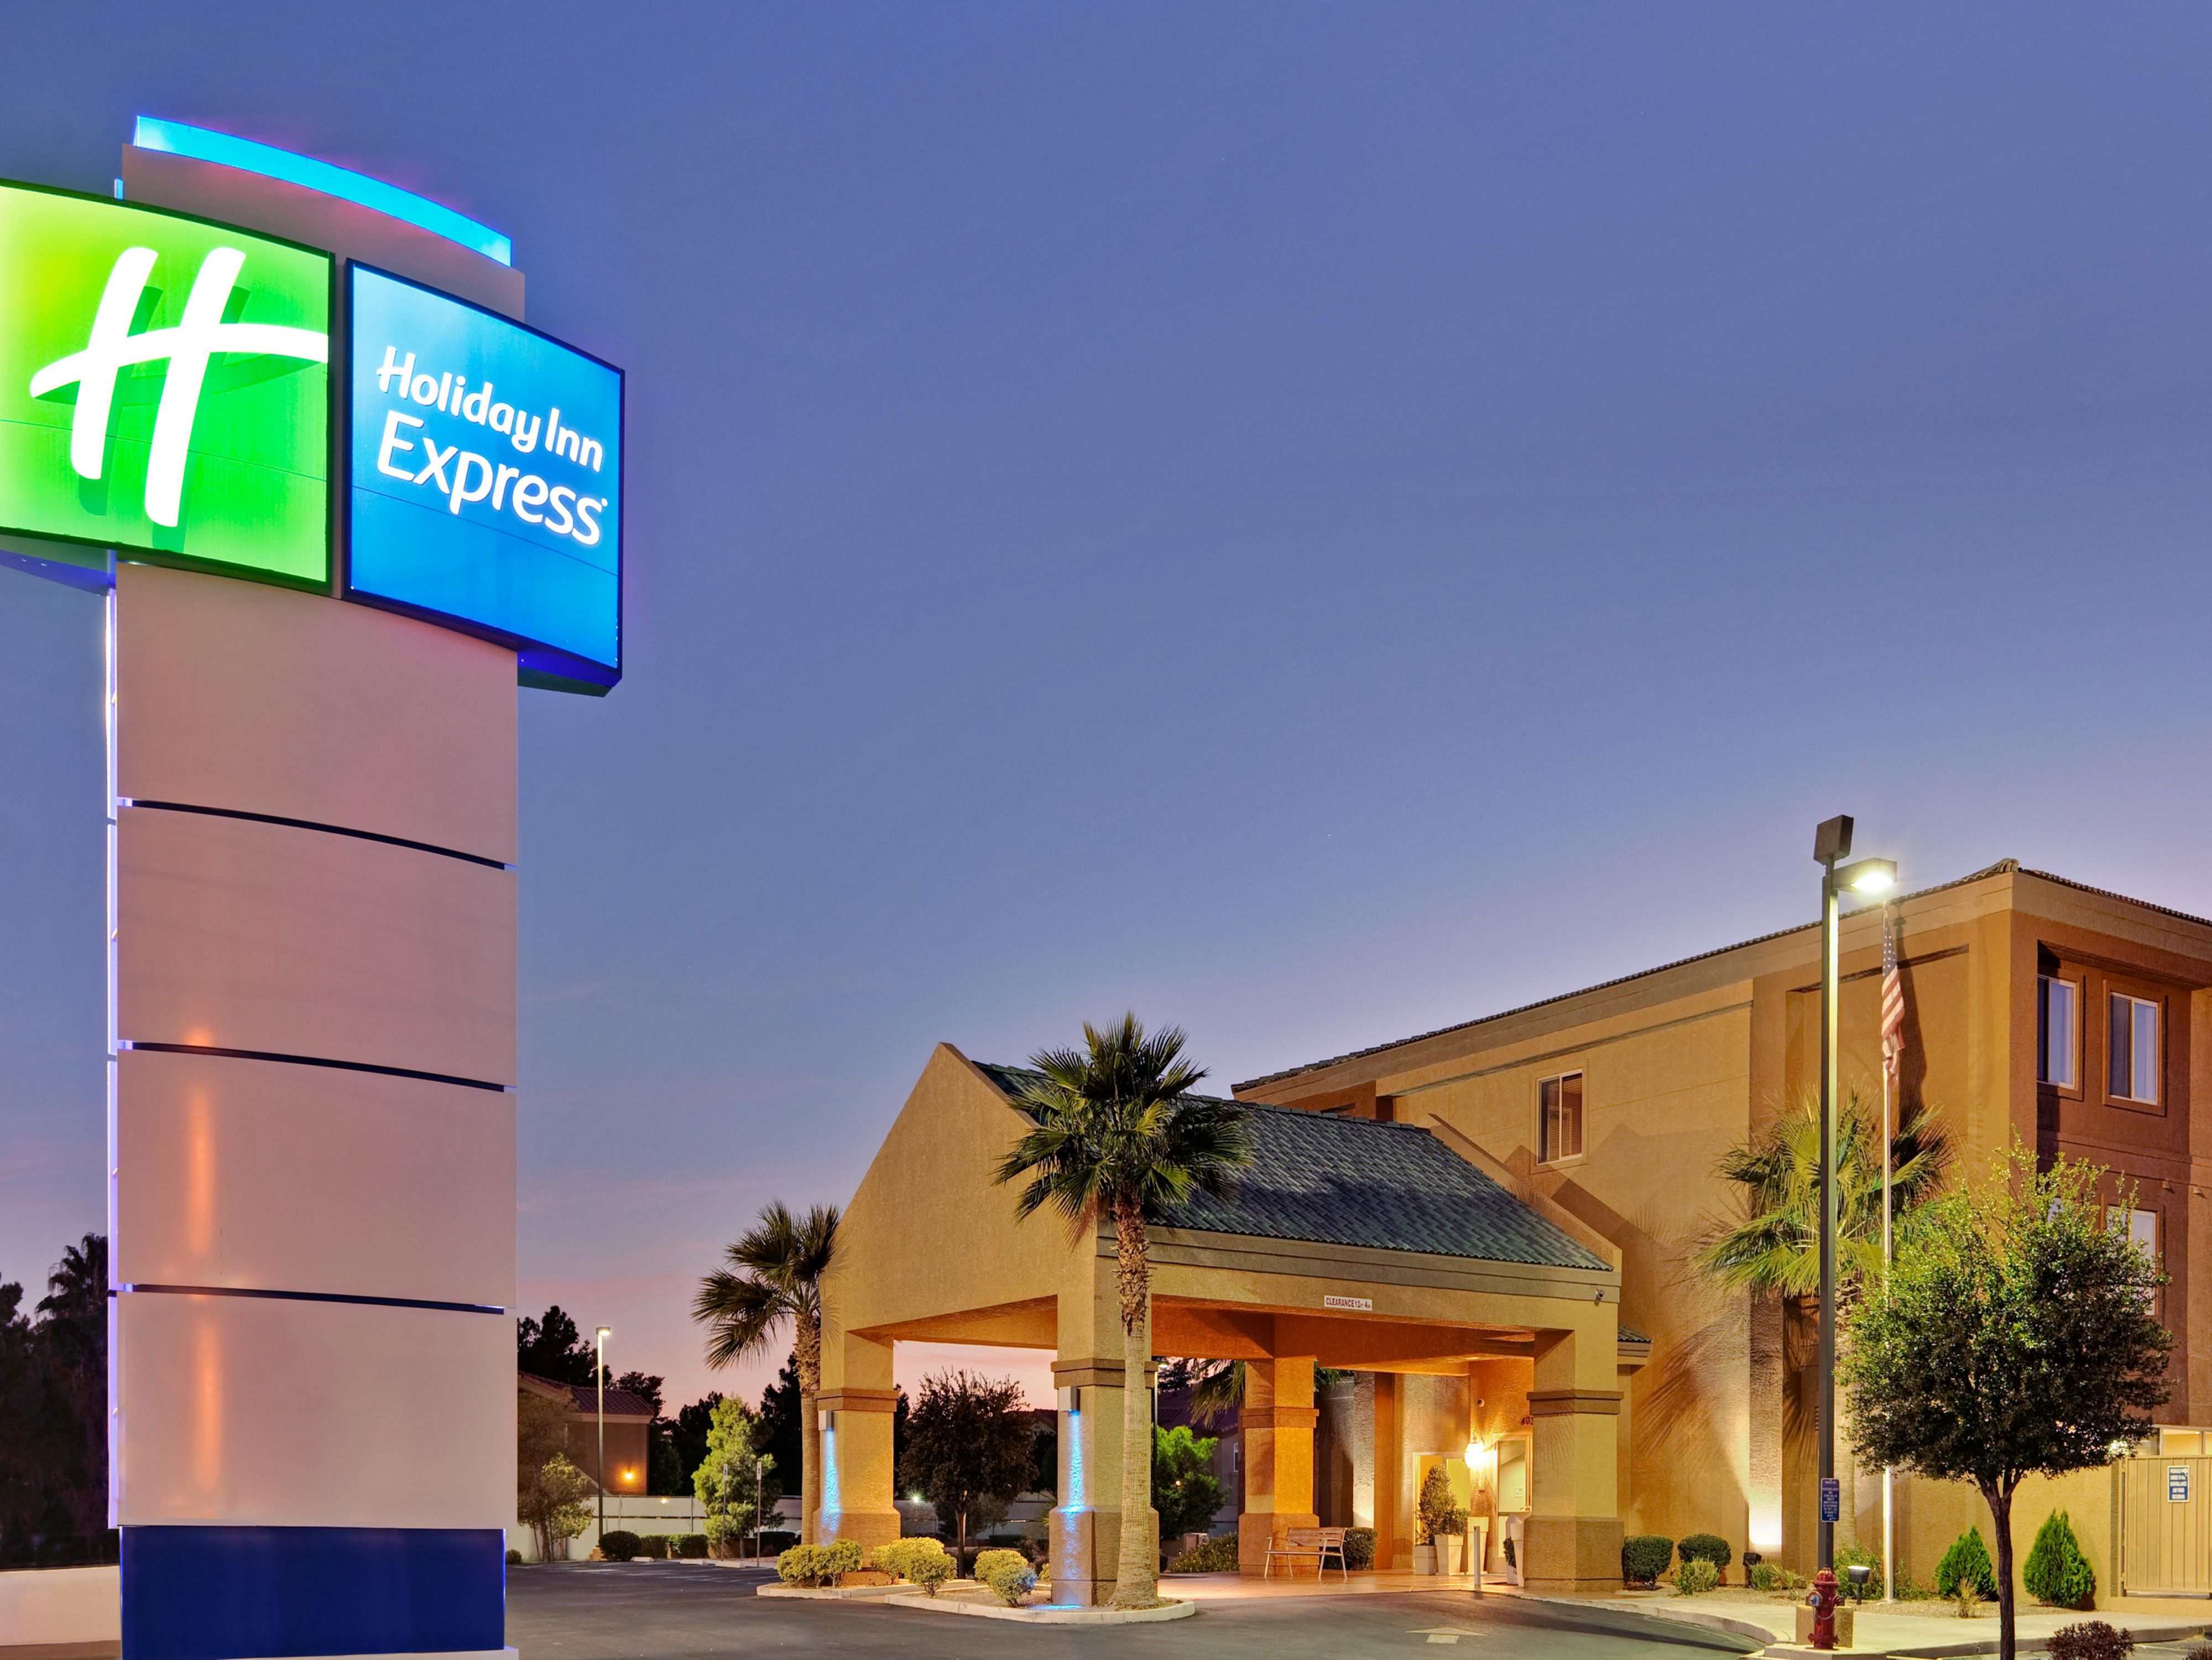 Holiday Inn Express Las Vegas 4173494542 4x3